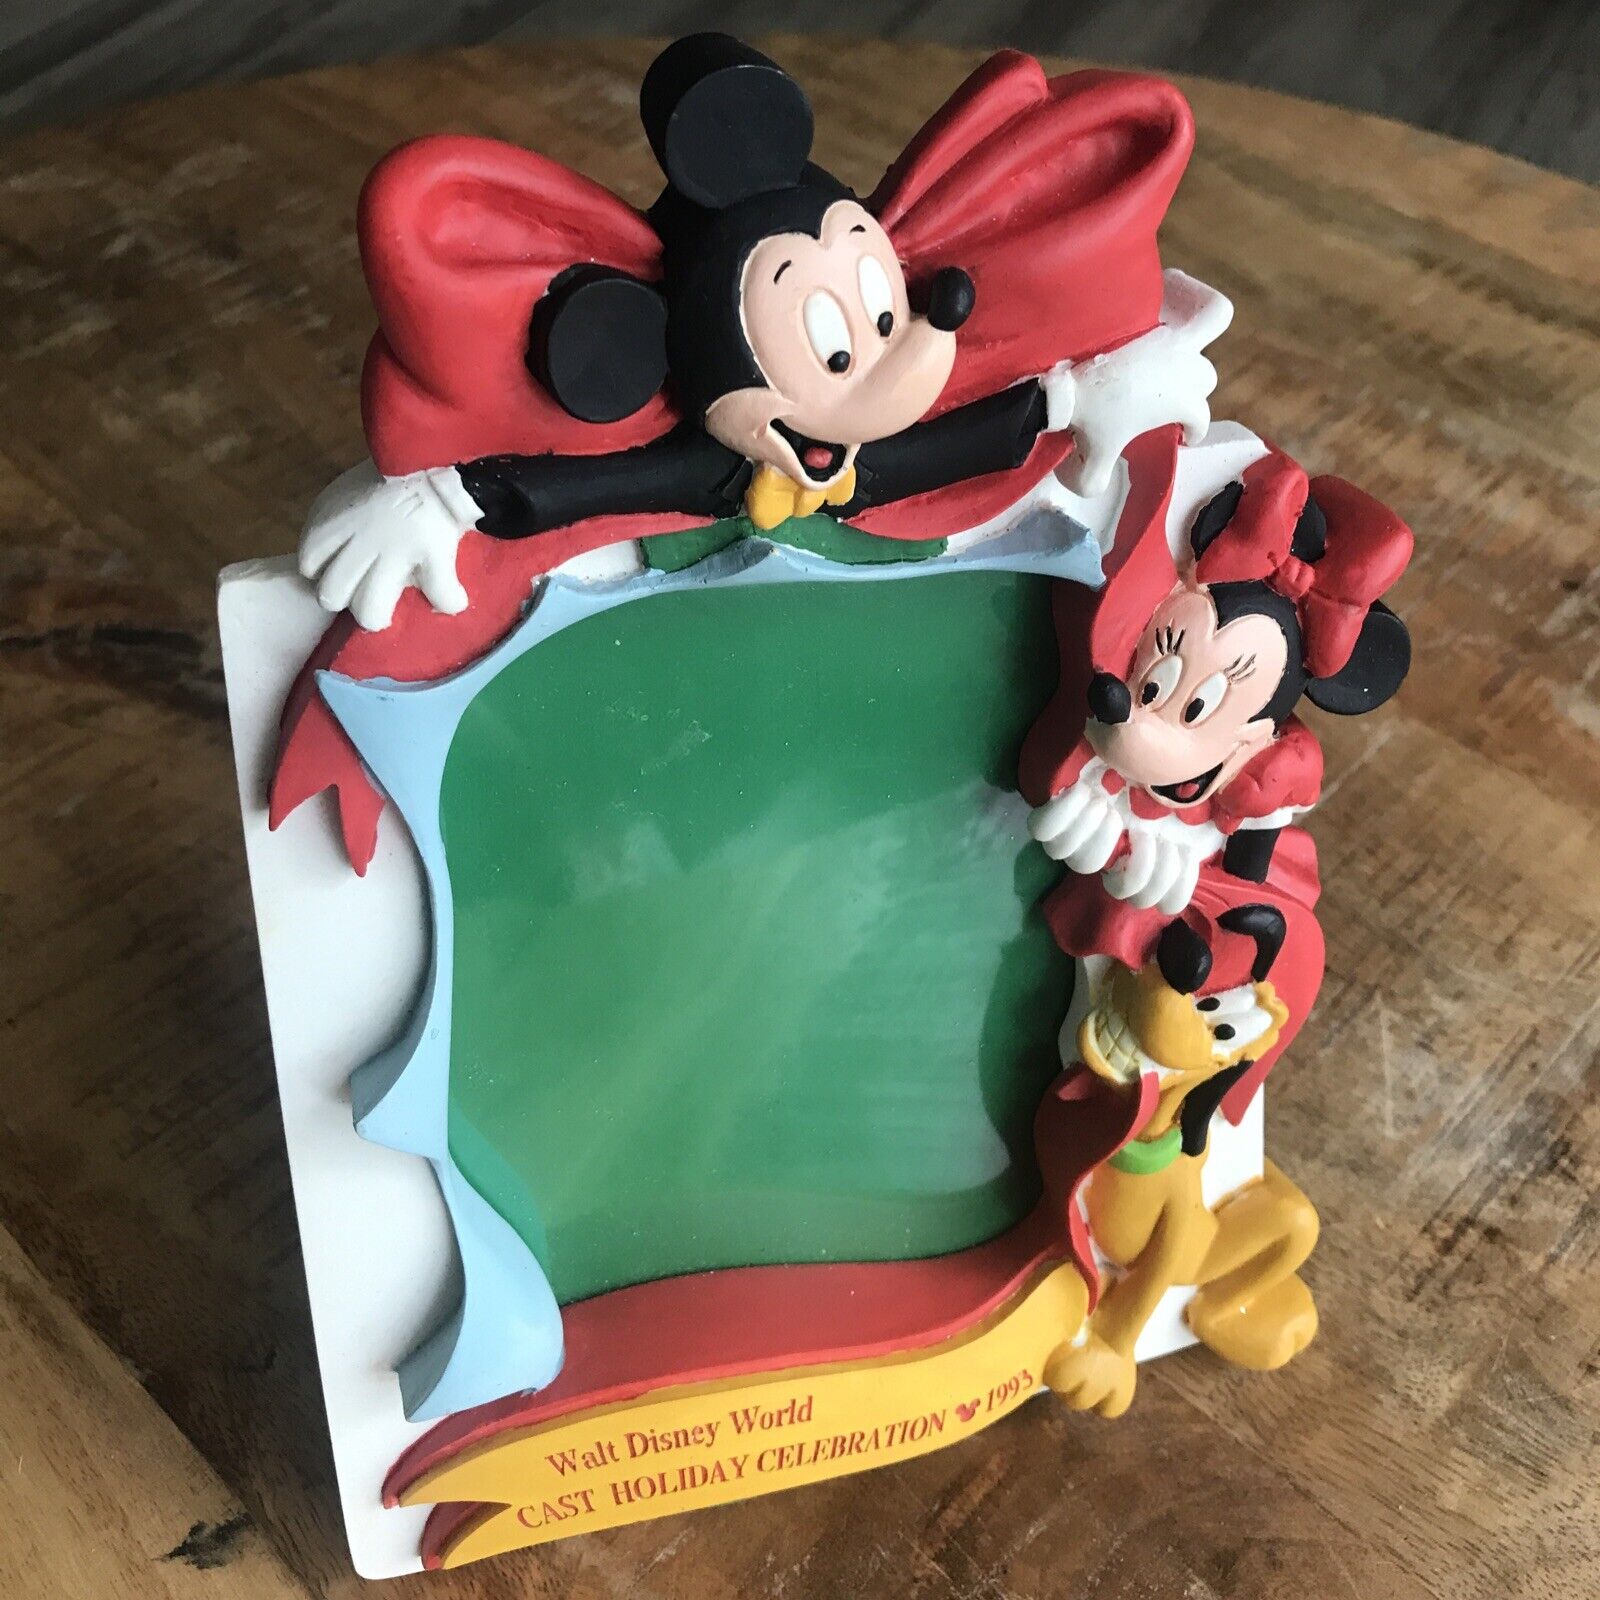 Vtg Walt Disney World Cast Holiday Celebration Mickey Mouse Picture Frame 1993